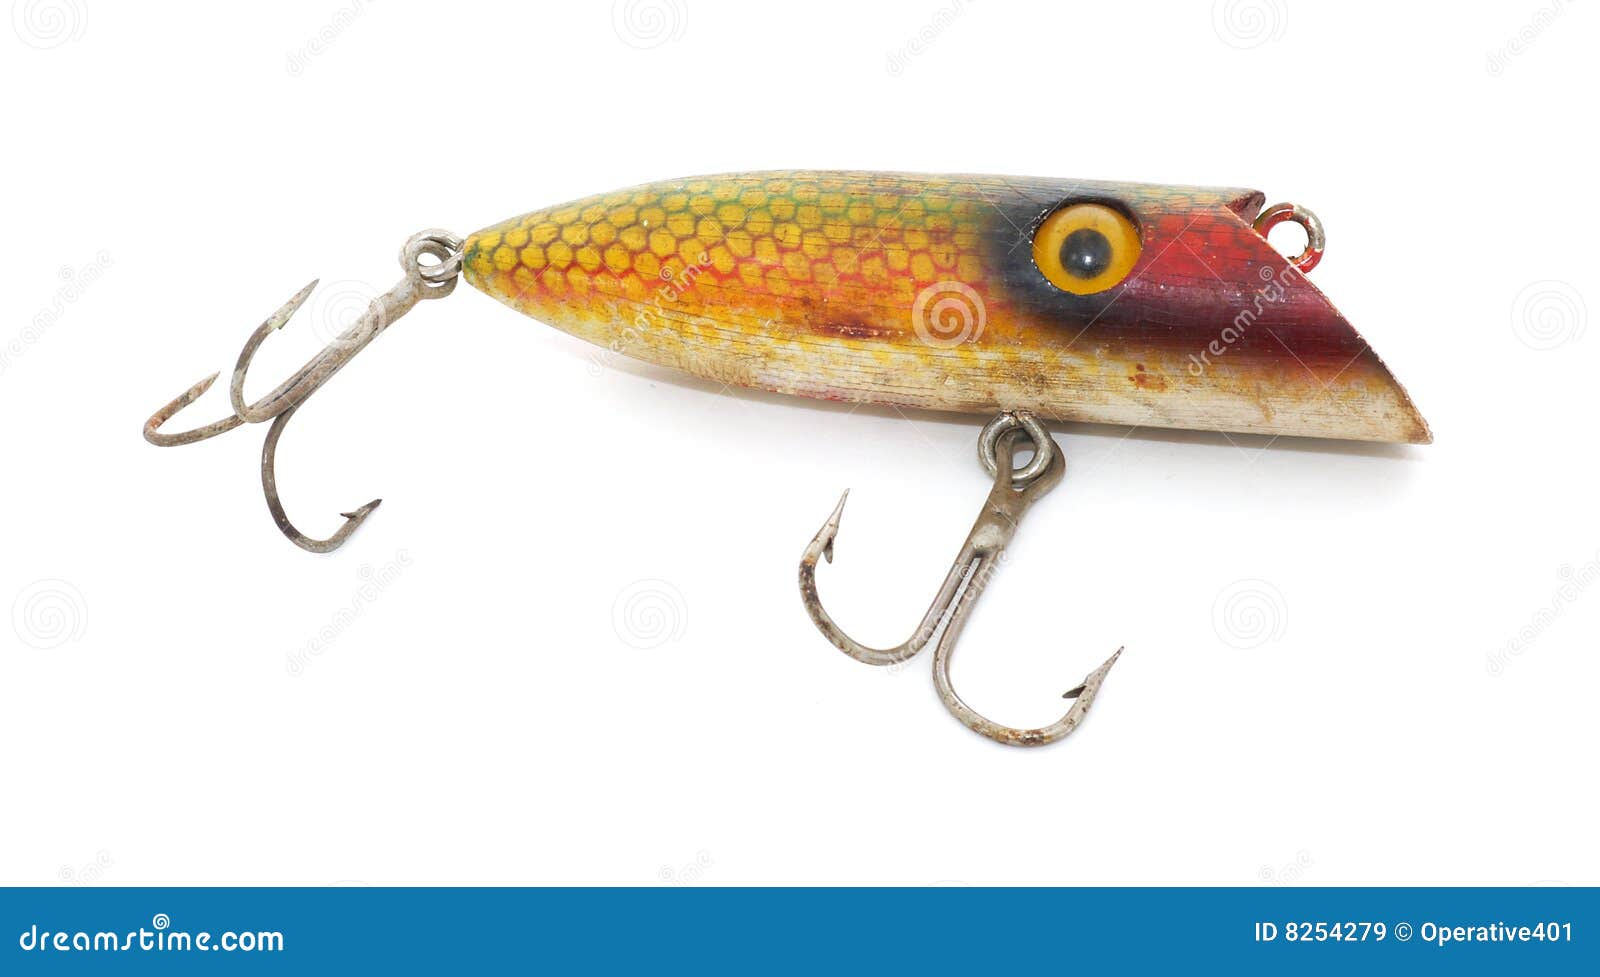 Antique fishing lure stock image. Image of close, antique - 8254279